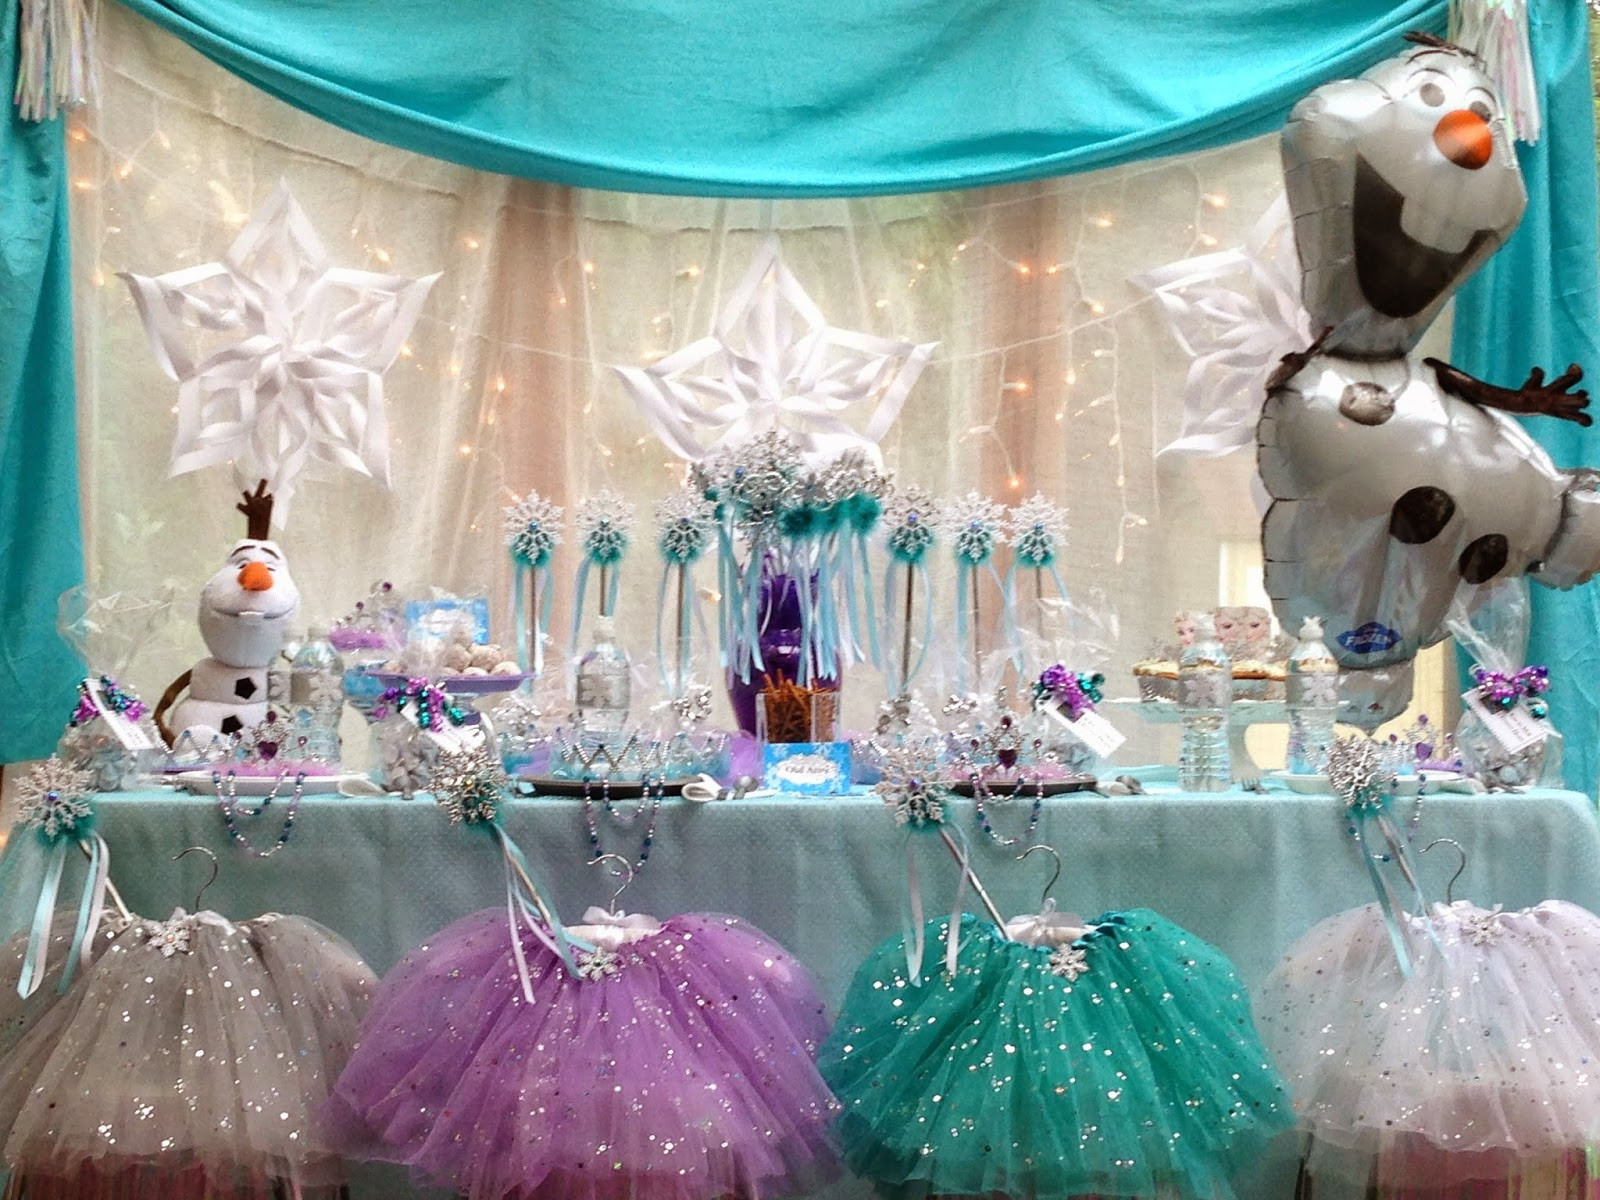 Frozen Birthday Decorations DIY
 The Princess Birthday Blog FROZEN DIY Snowflake Decorations